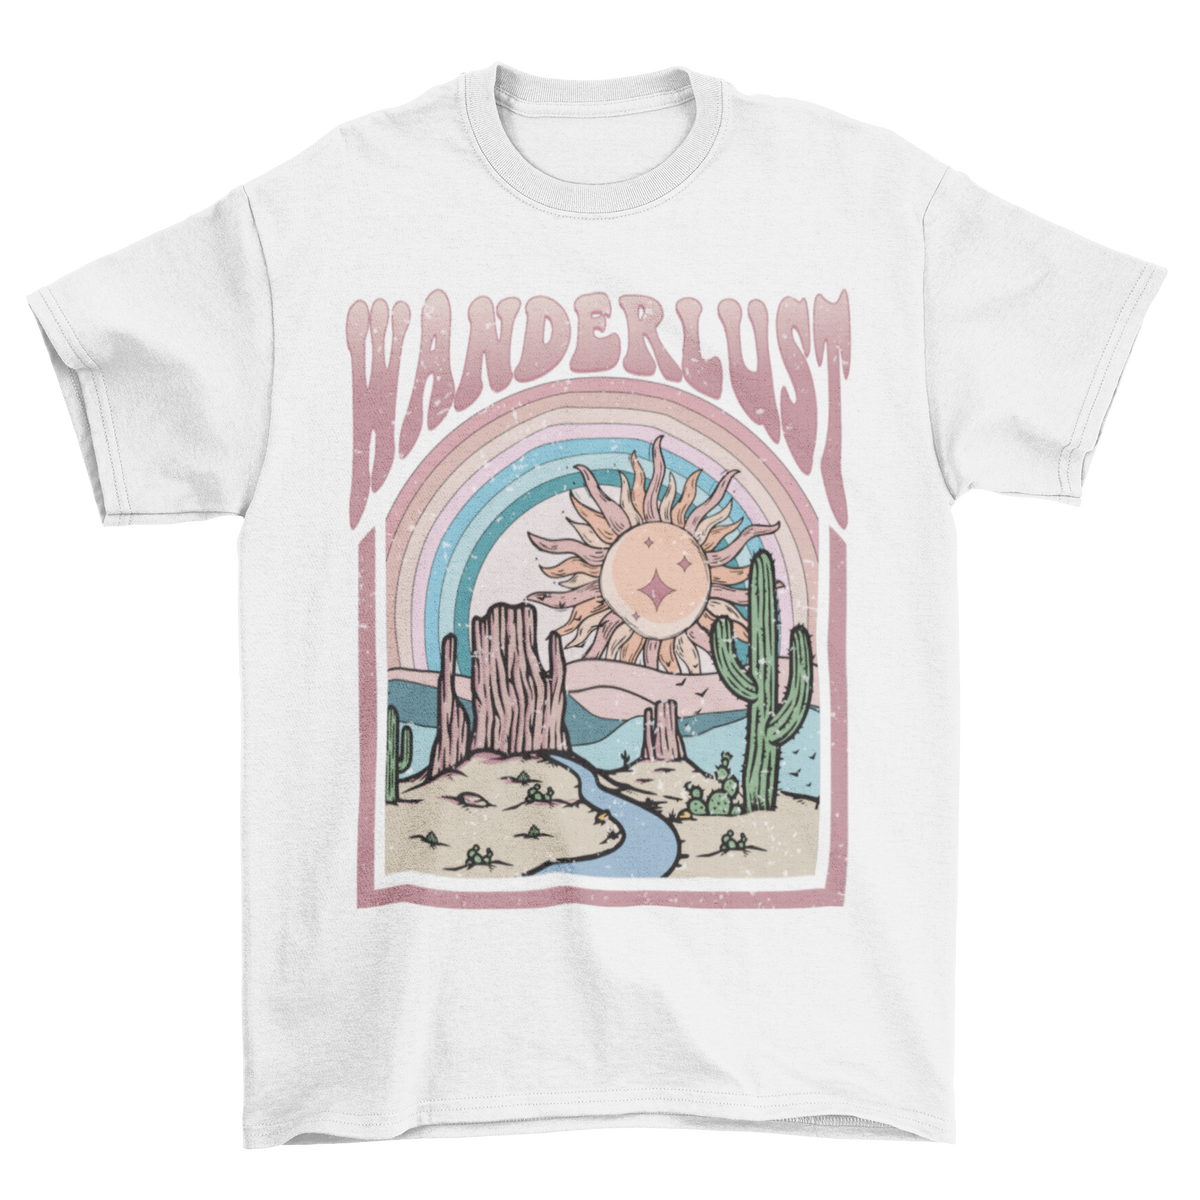 Wanderlust - T-shirt Unisex